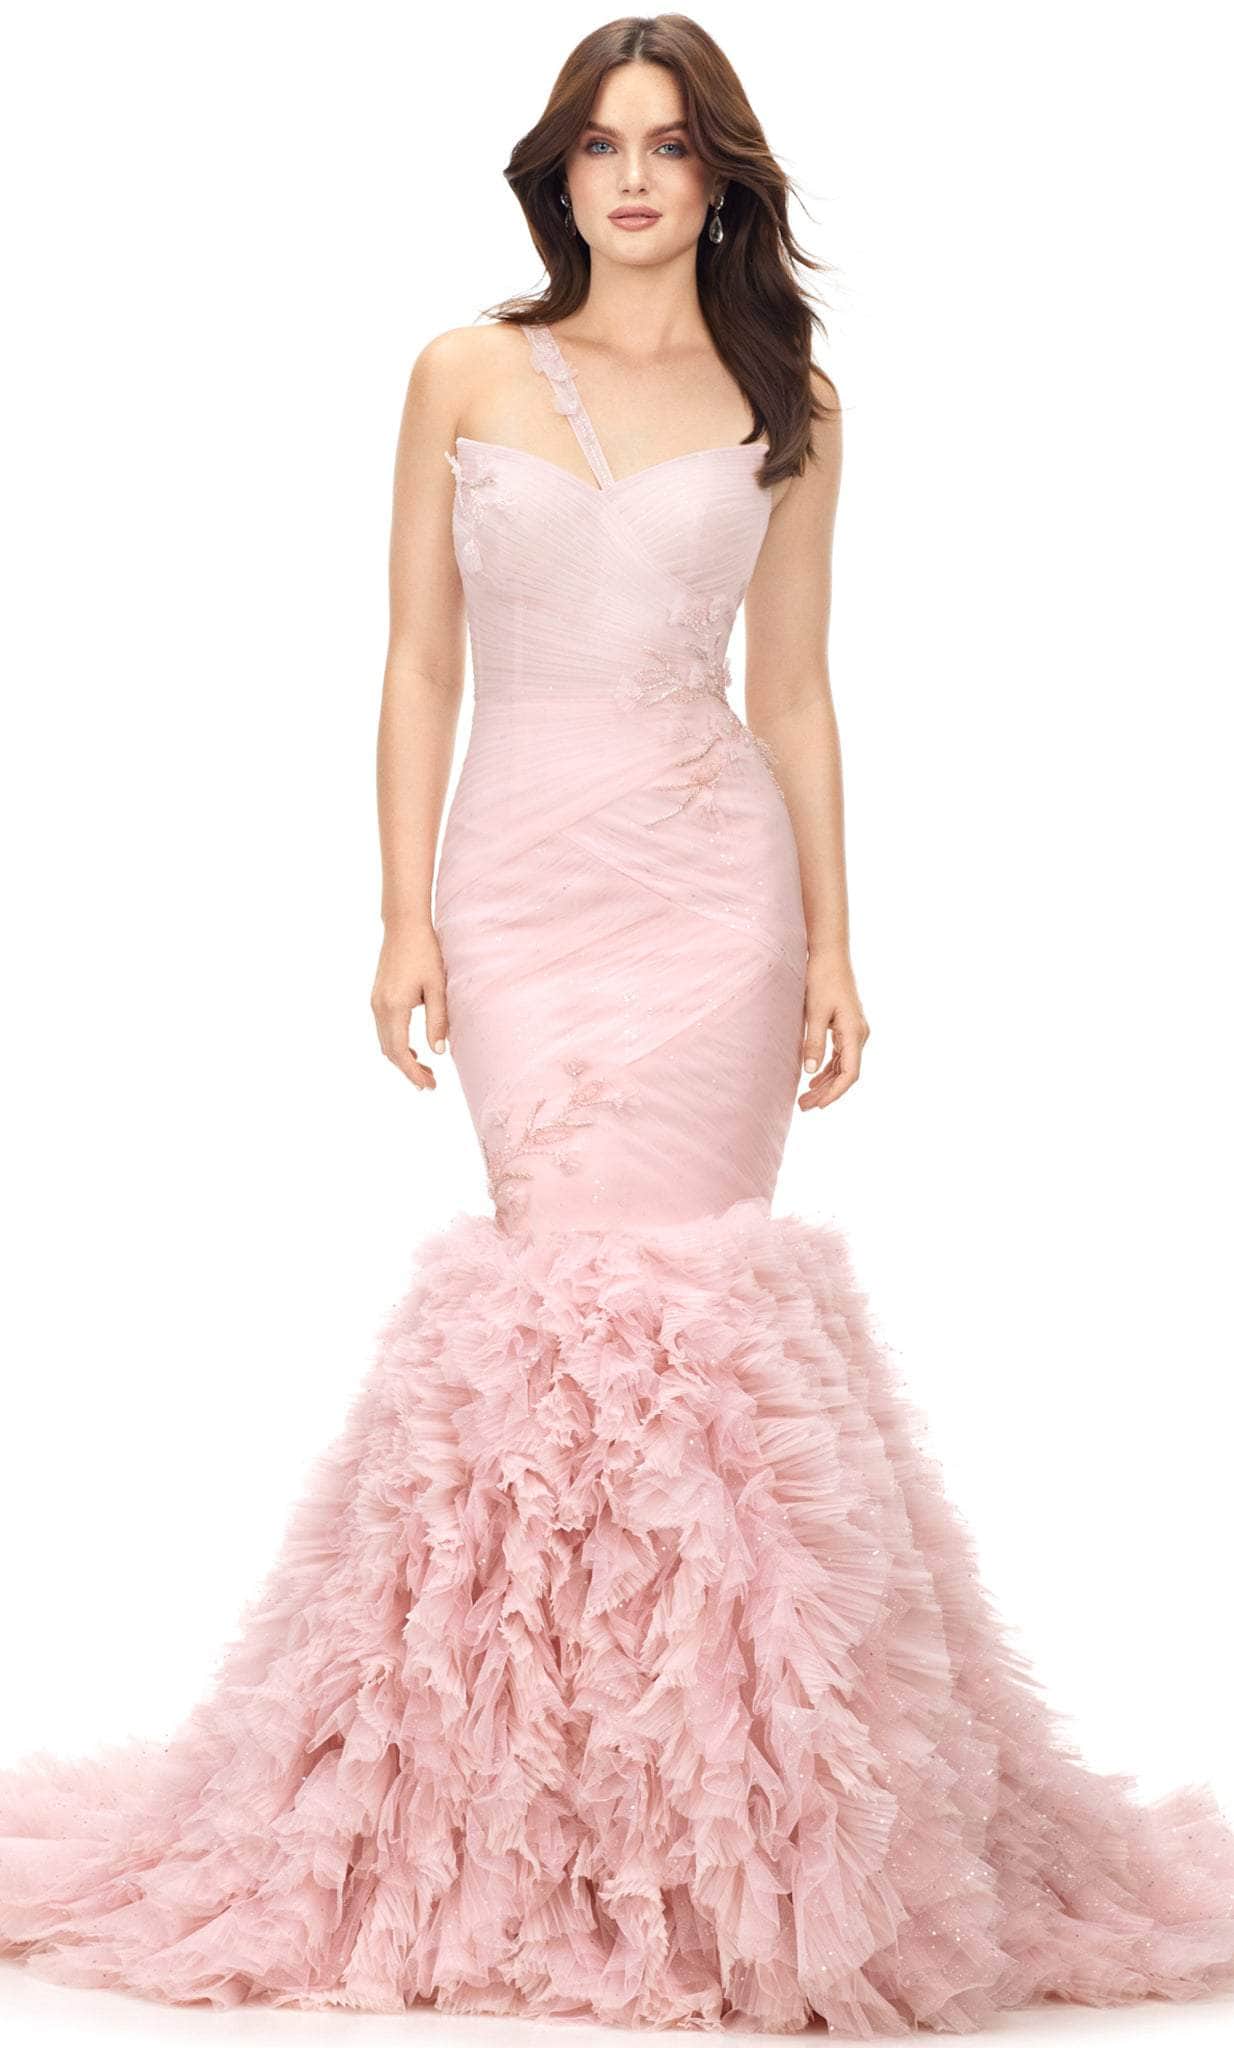 Ashley Lauren 11232 - Asymmetric Strap Tulle Mermaid Gown Special Occasion Dress 0 / Blush